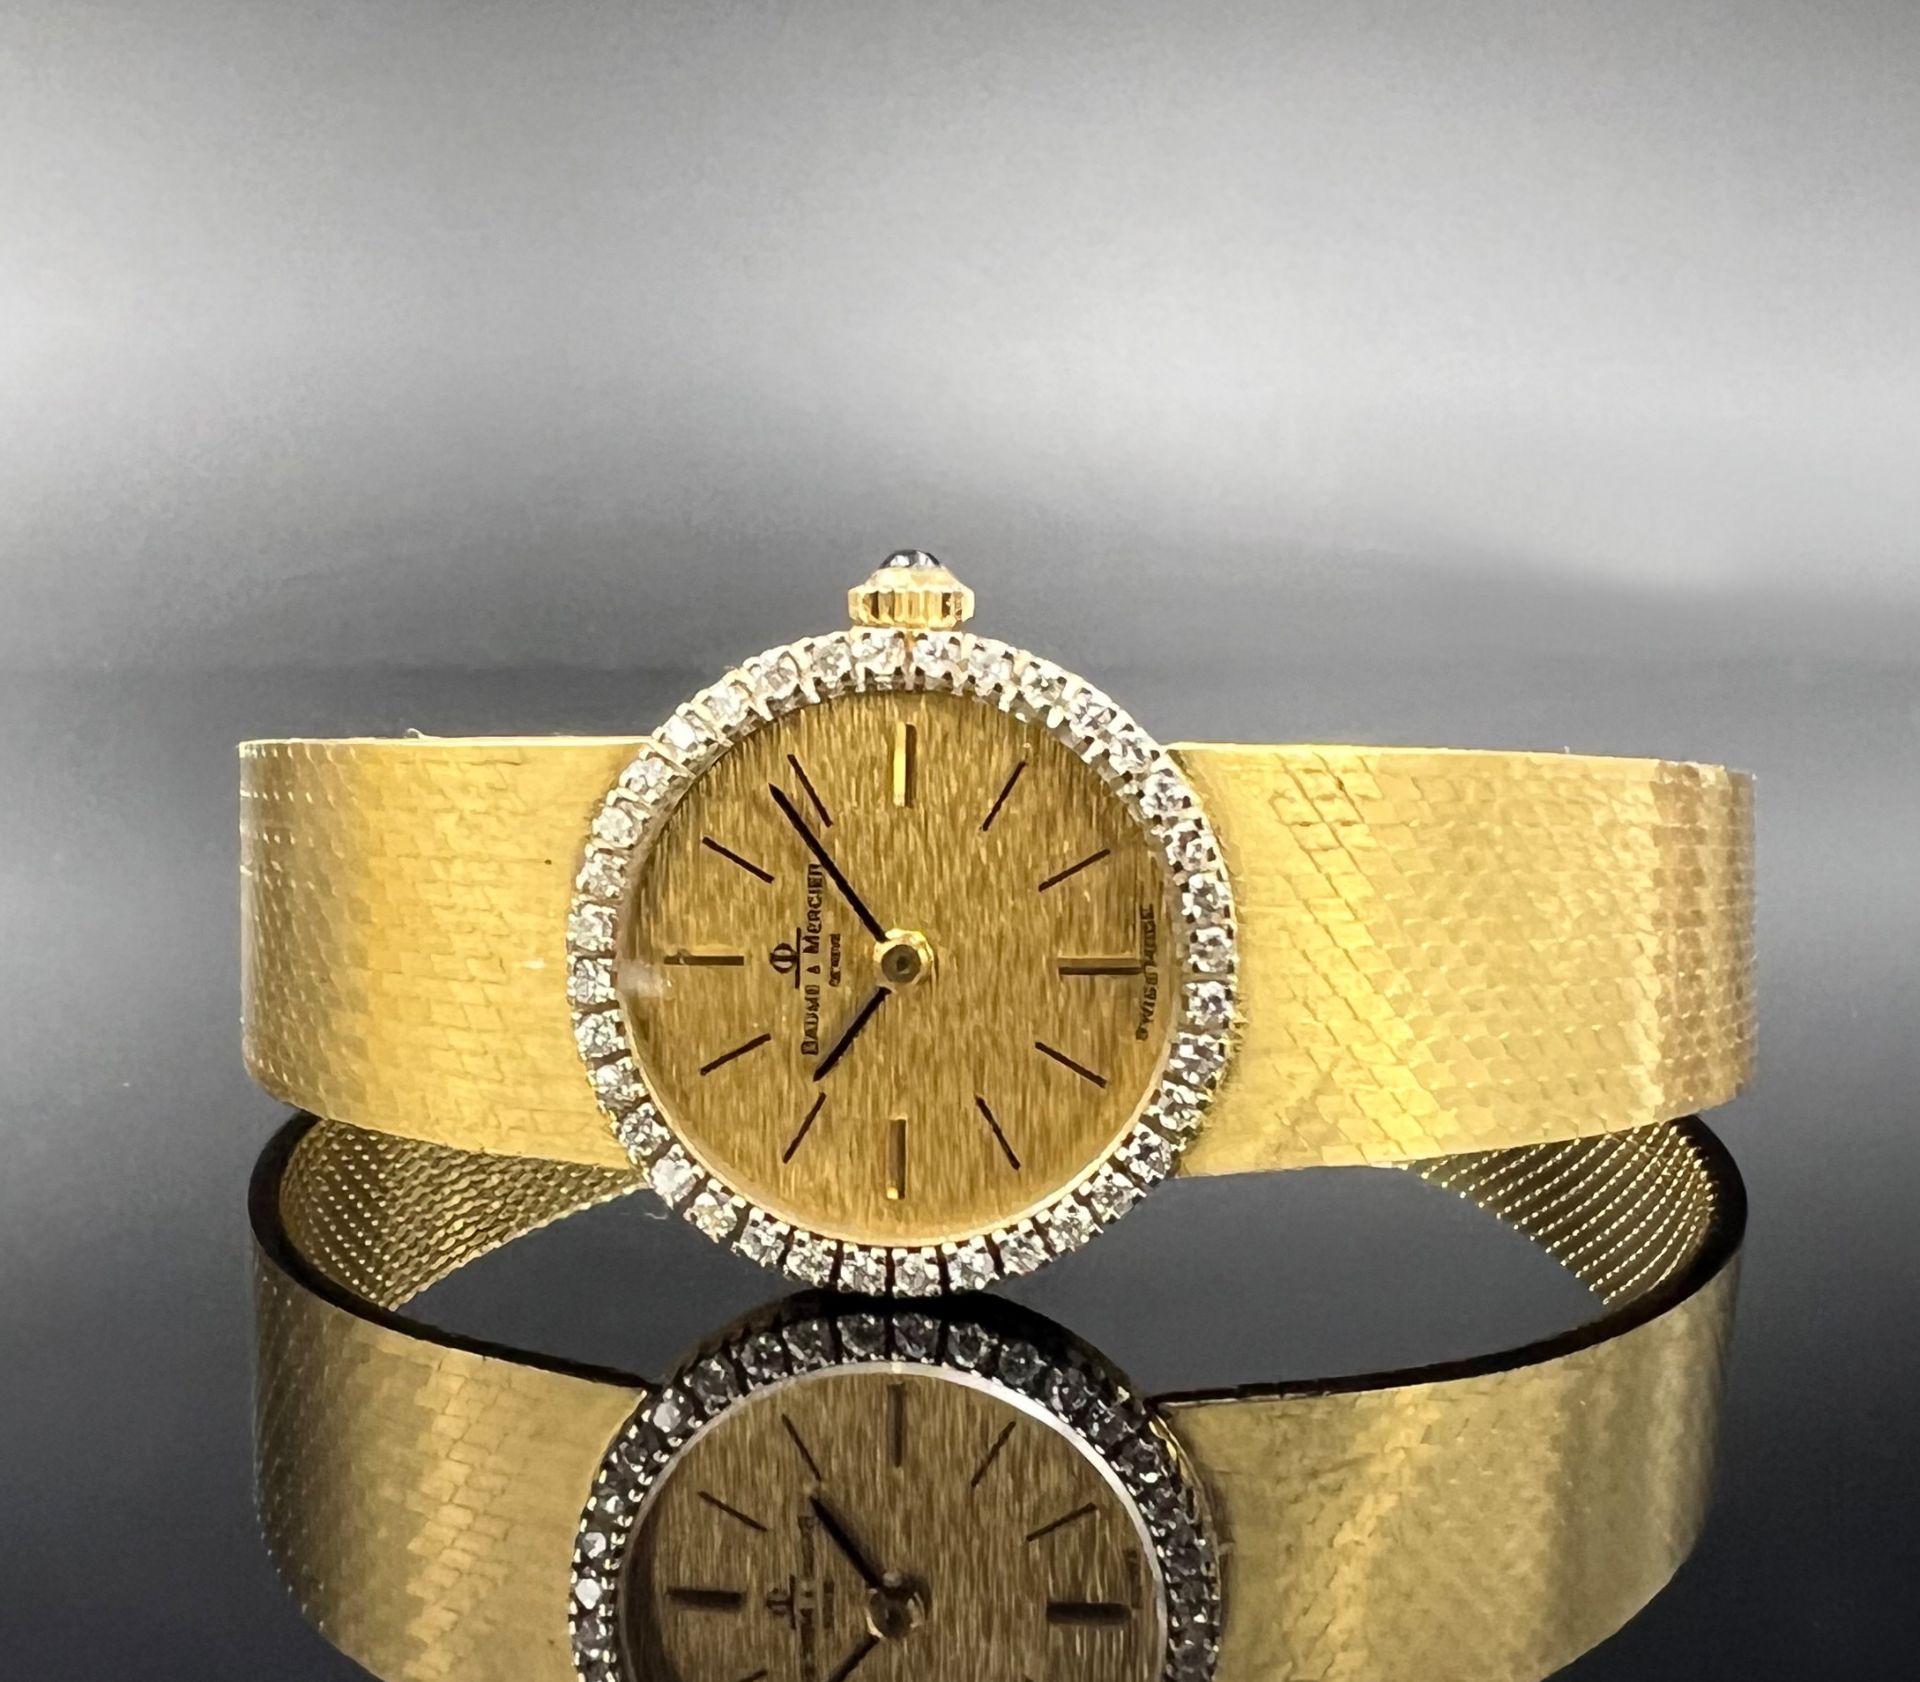 Baumen & Mercier ladies' wristwatch. 750 yellow gold with diamonds.